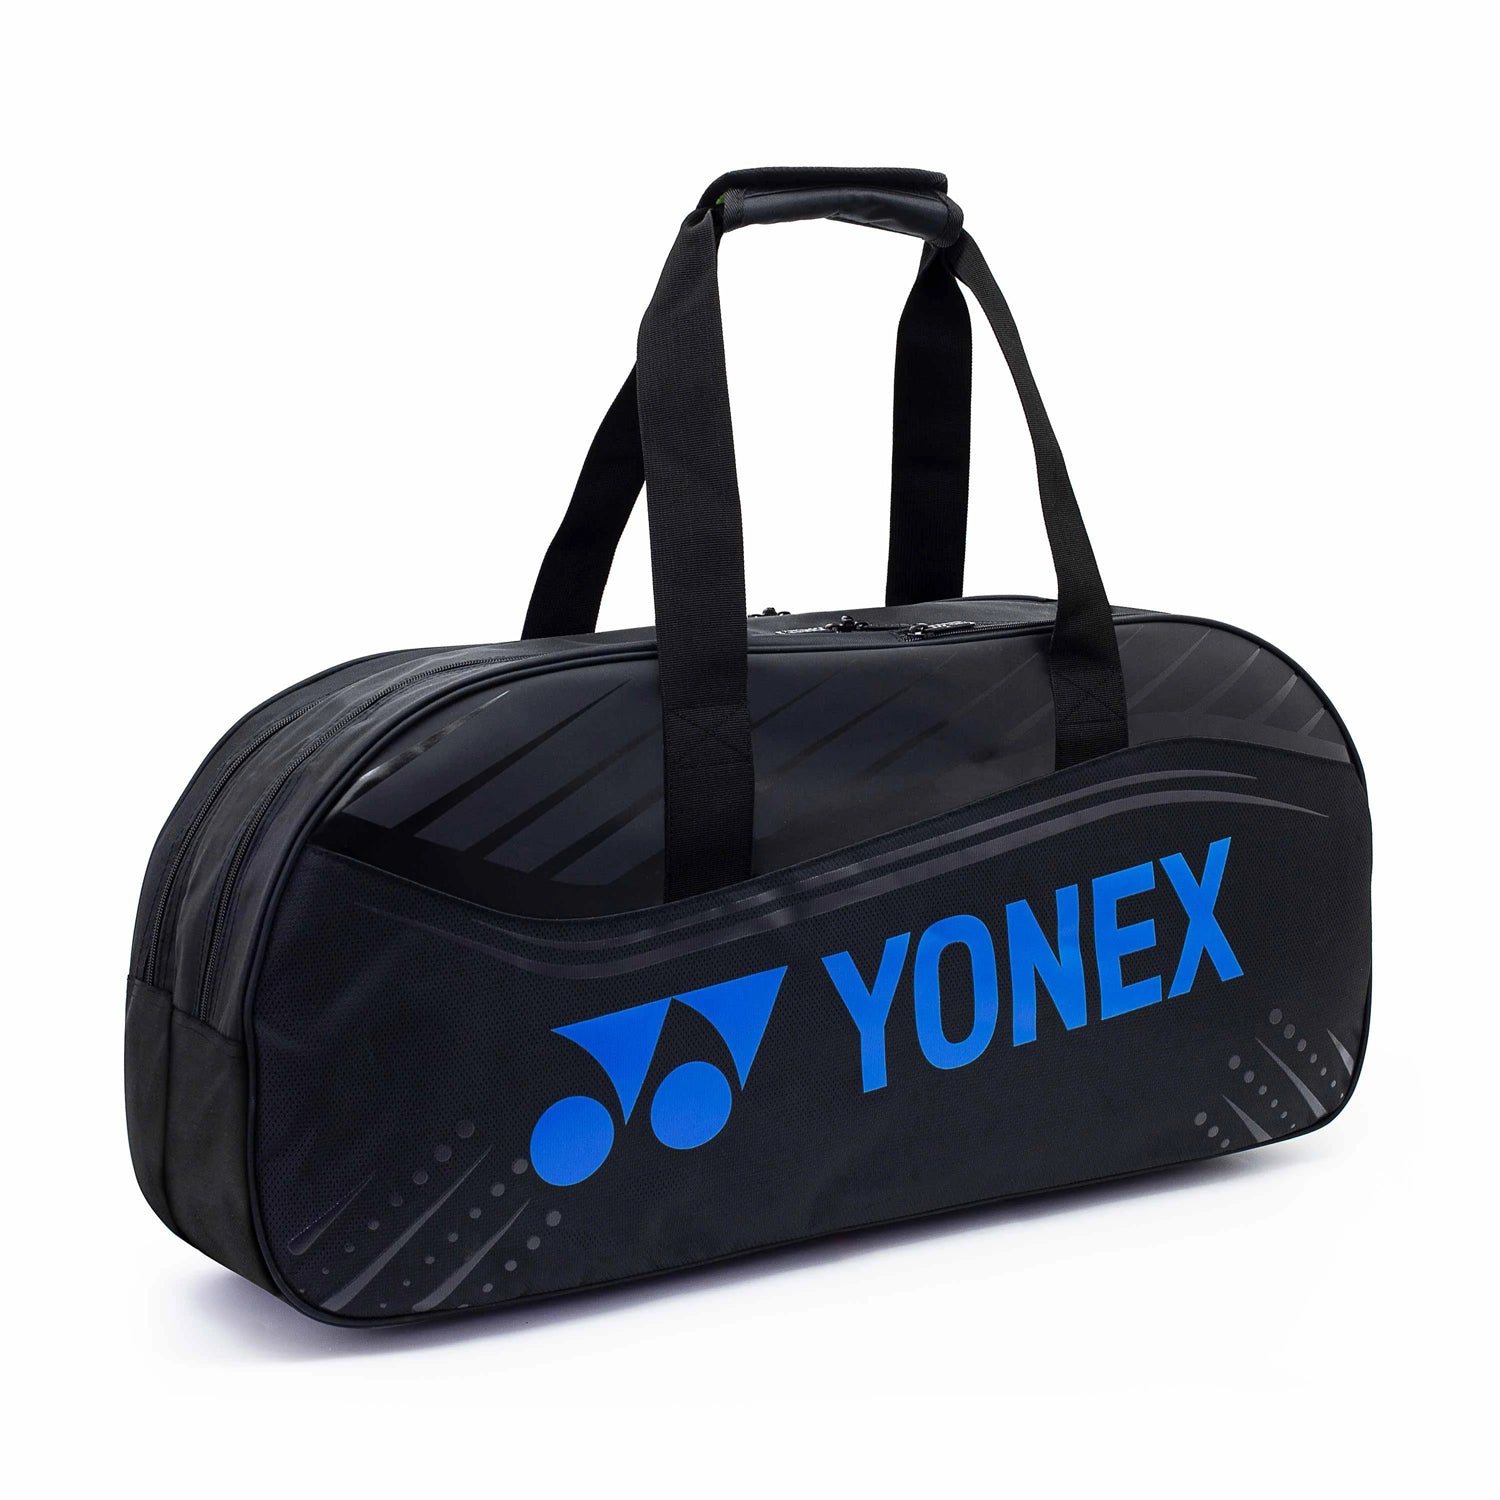 Yonex 2231 Badminton Tournament Bag ,Black/Dazling Blue - Best Price online Prokicksports.com